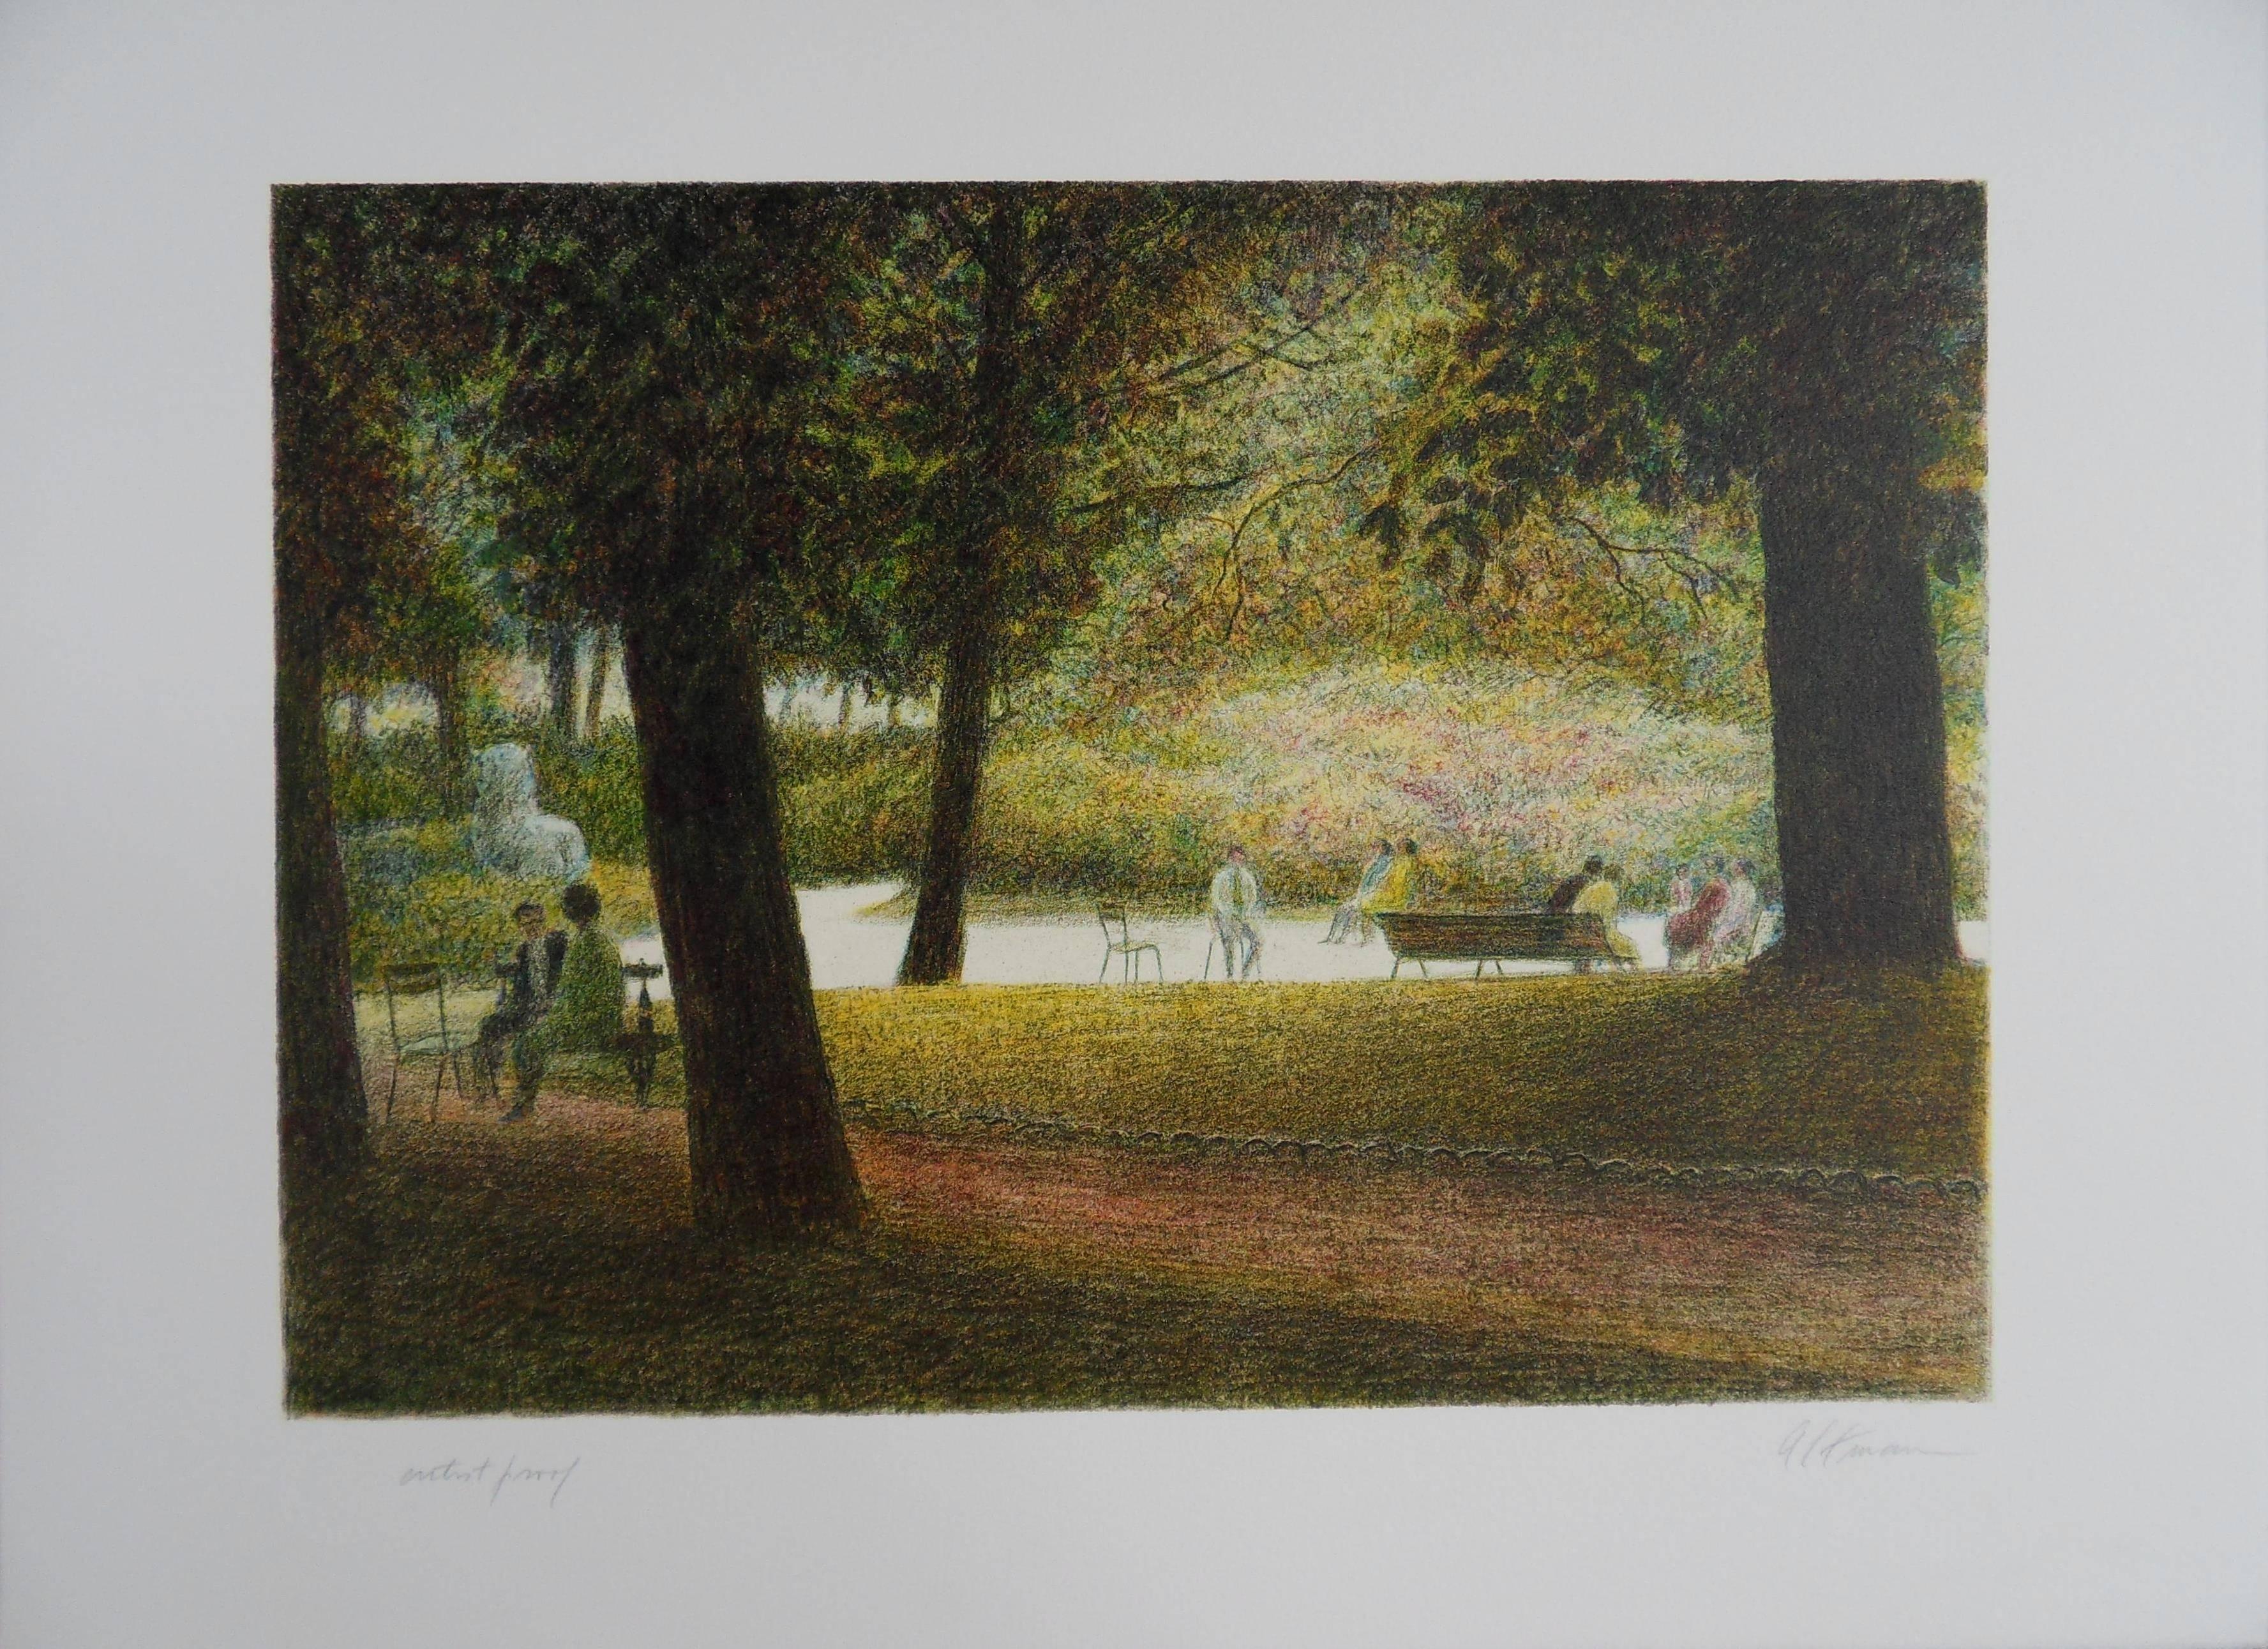 Harold Altman Landscape Print - Central Park Views : A Break - Original handsigned lithograph